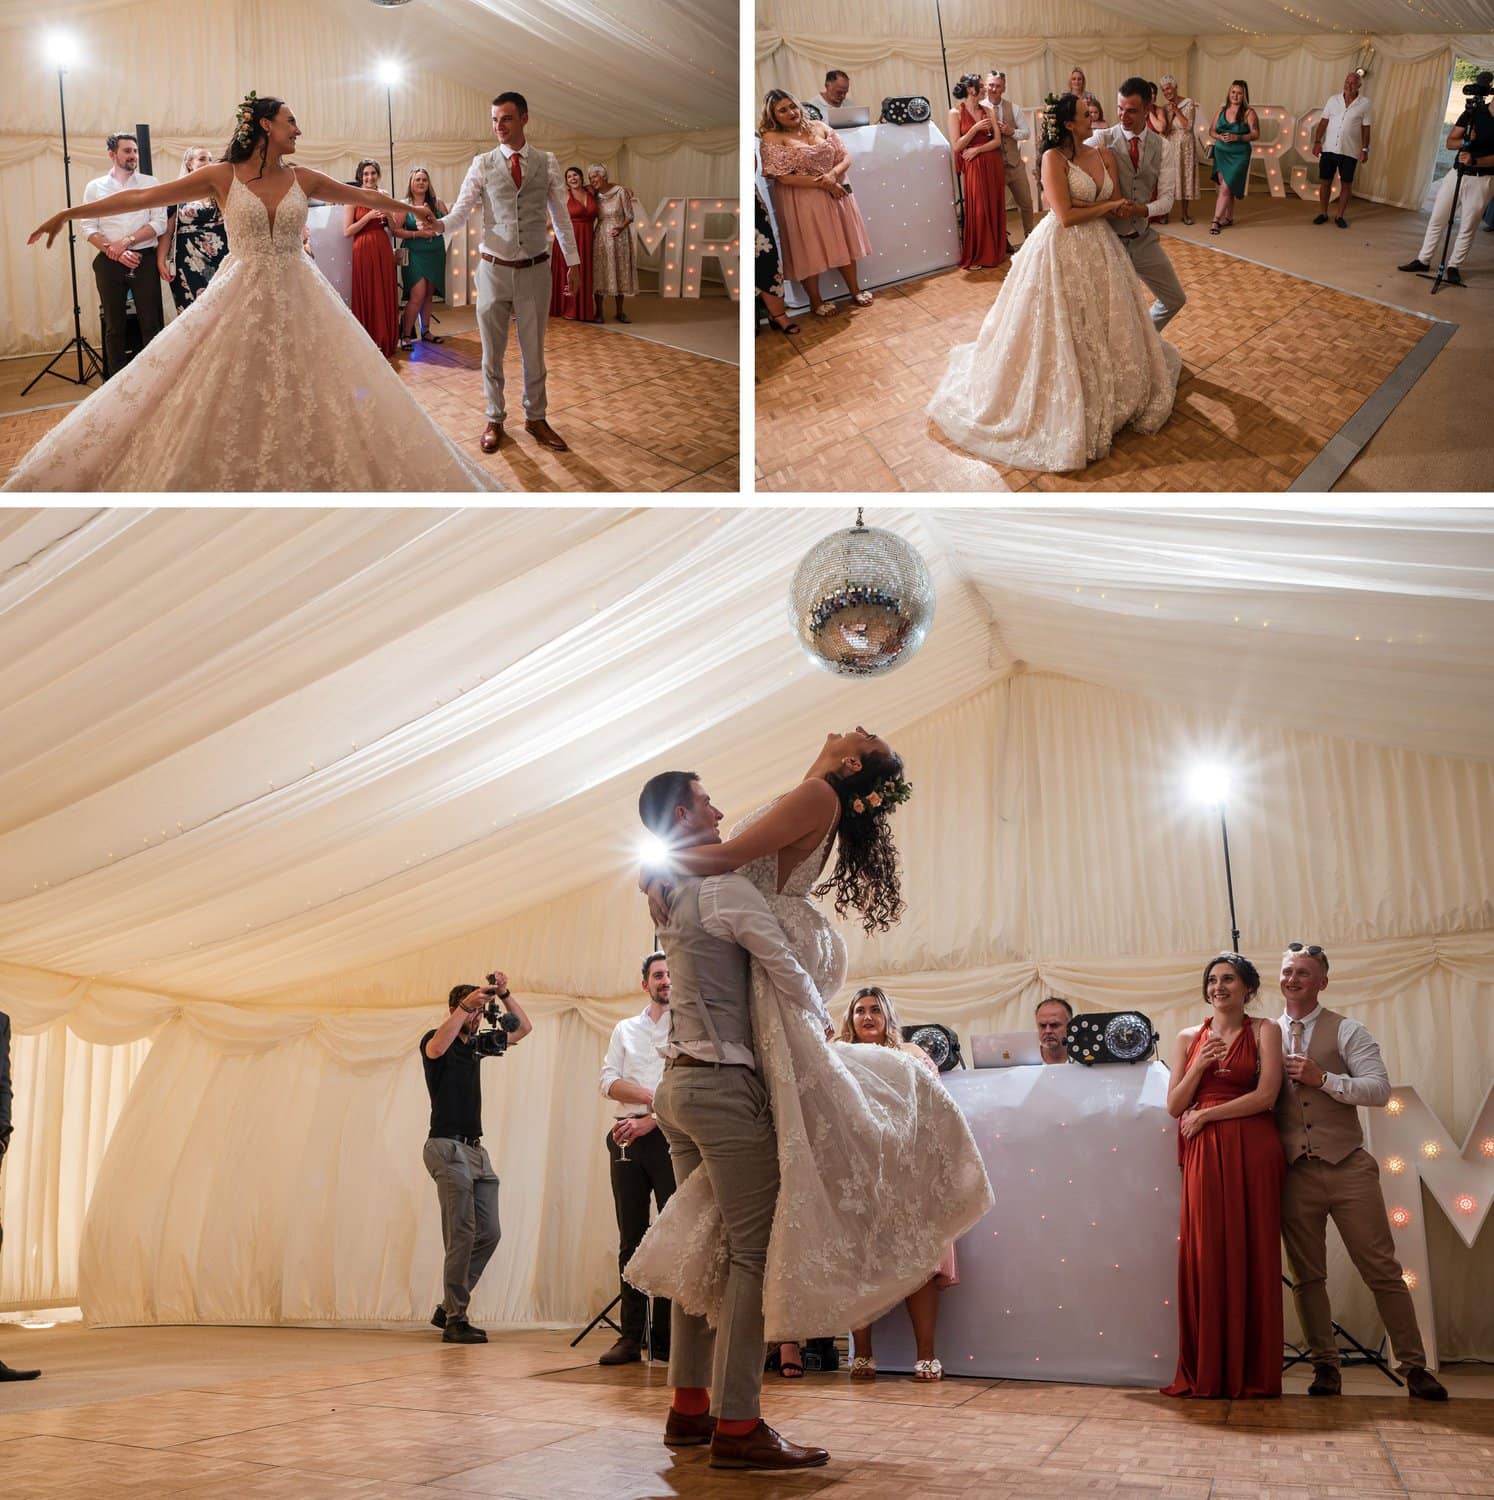 First dance at Milborne St Andrew Rugby Club wedding reception